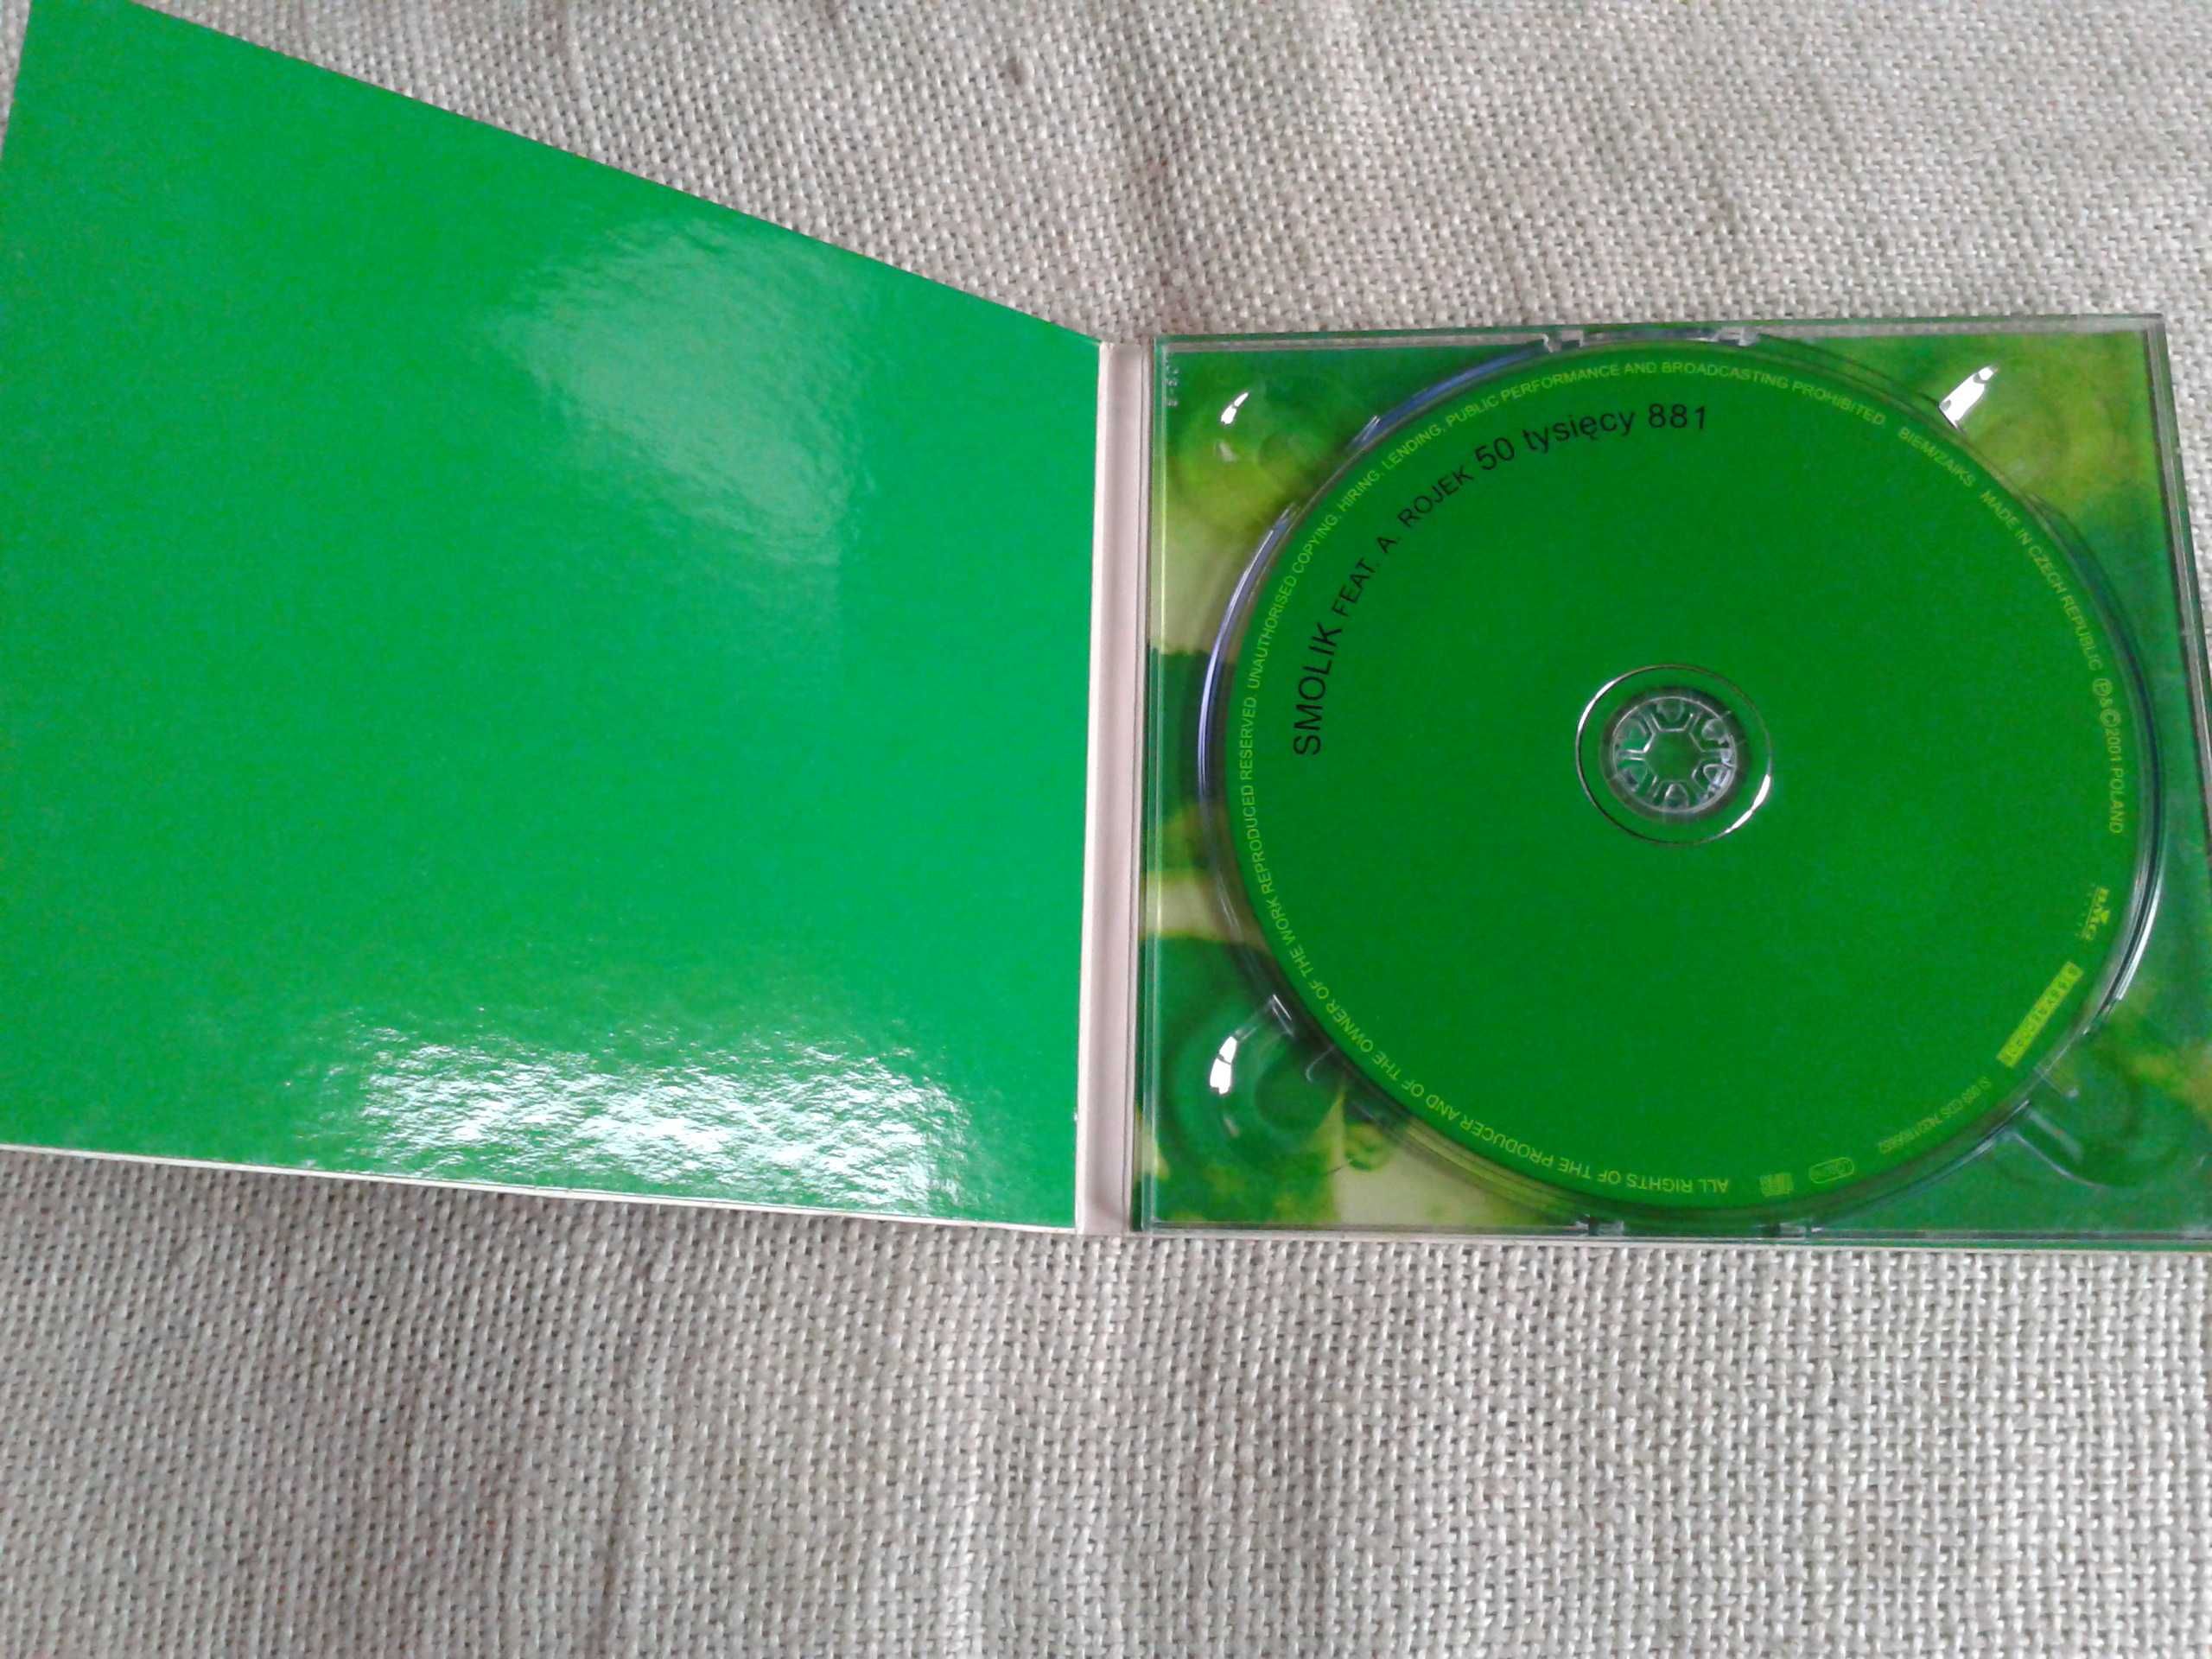 Smolik - 50 Tysięcy 881   CD